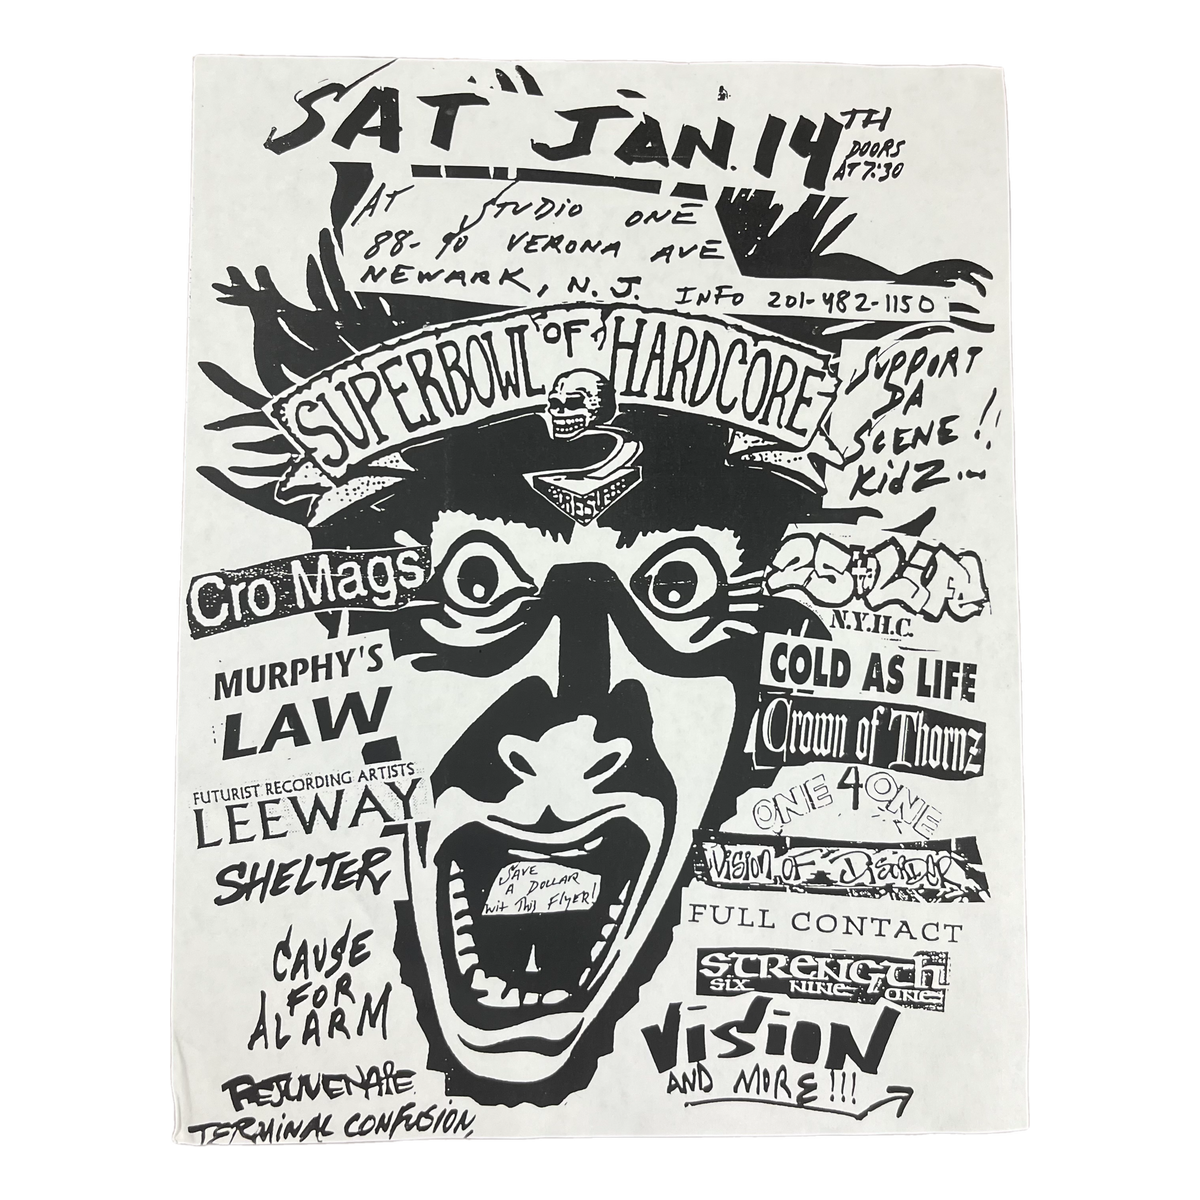 Vintage Superbowl Of Hardcore &quot;Cro-Mags Leeway 25 Ta Life Cold As Life&quot; NJ Show Flyer